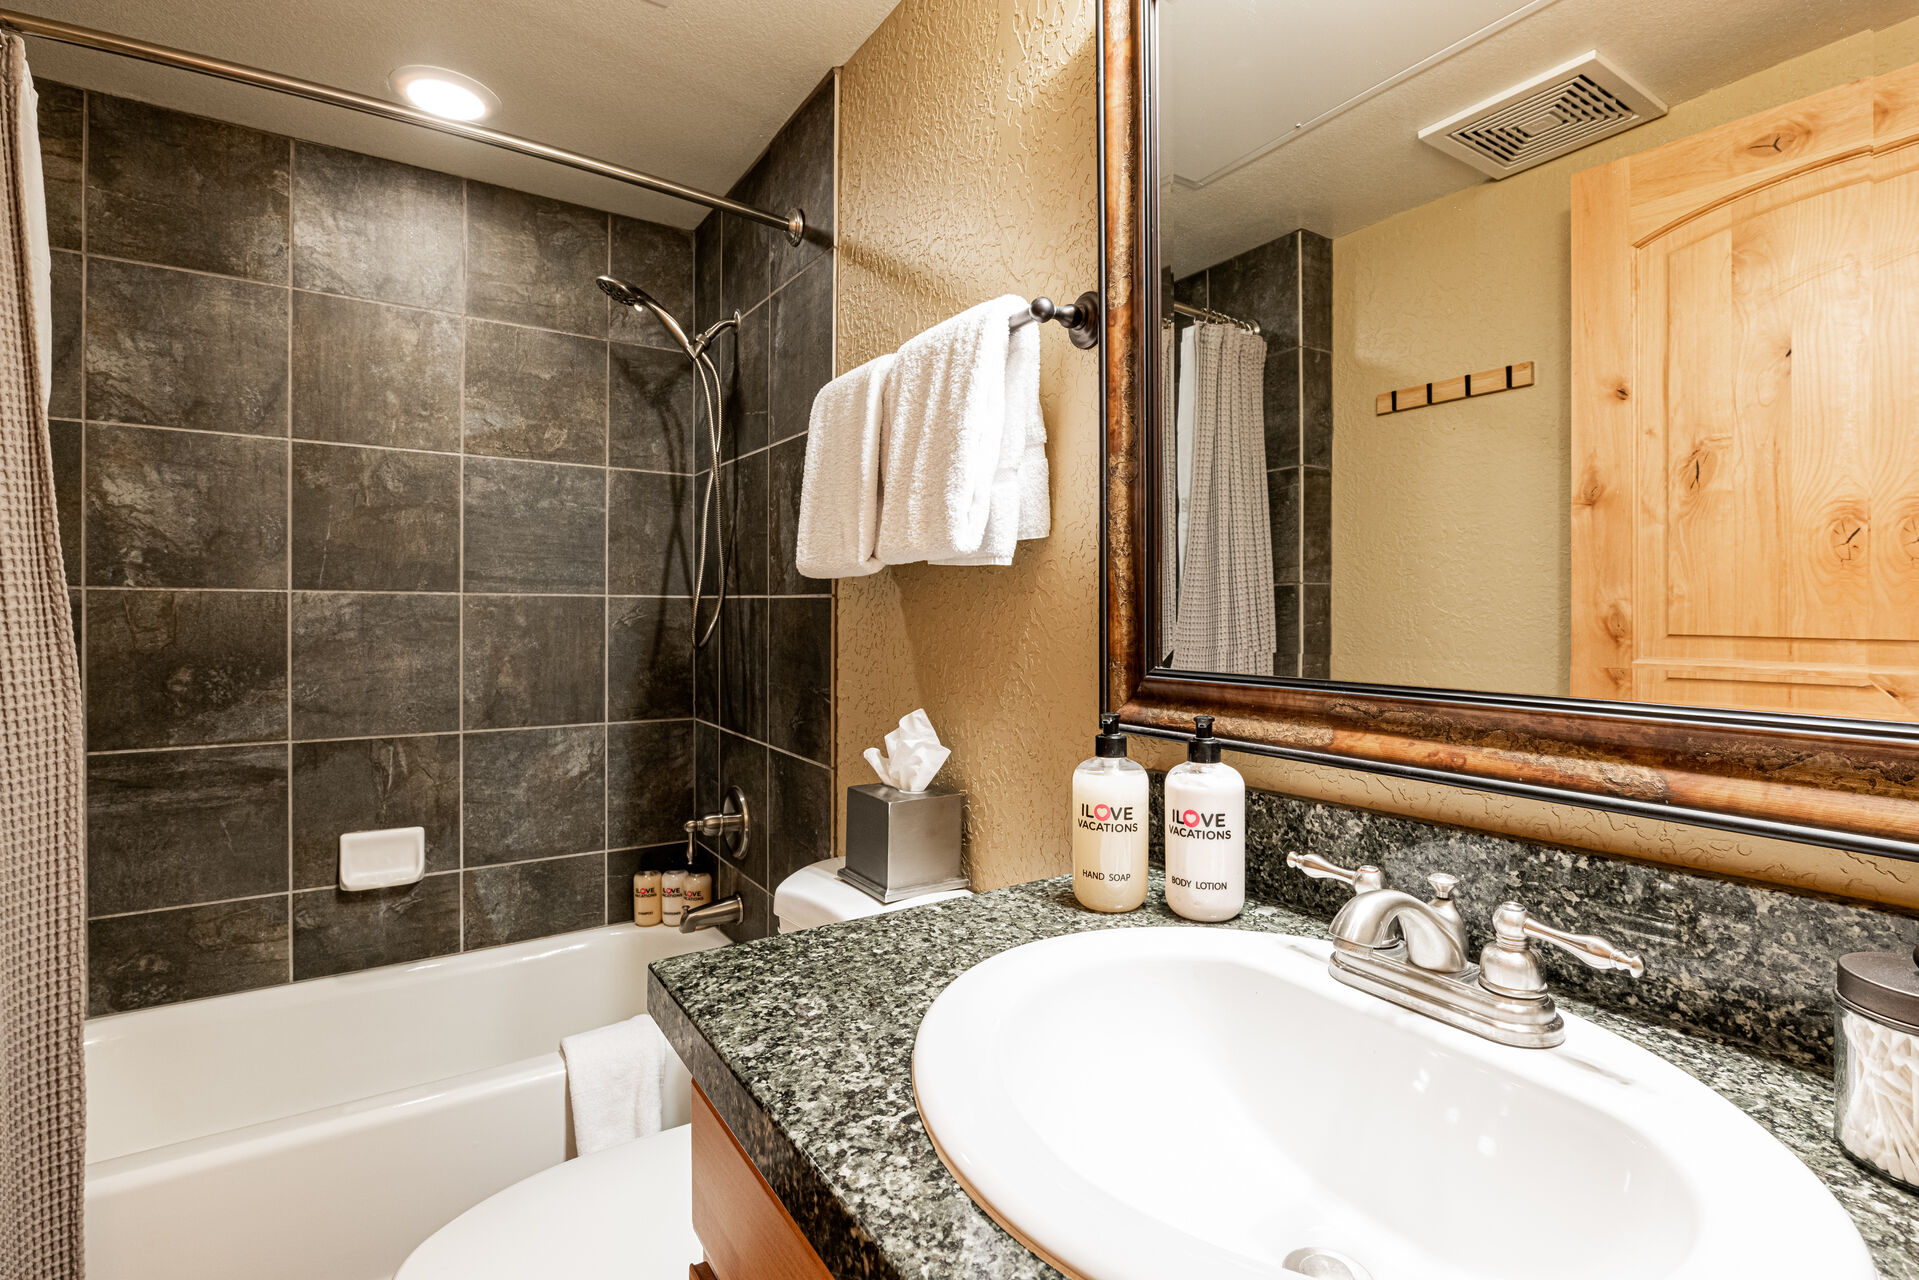 Upper level master bedroom en suite bathroom with tub/shower combo